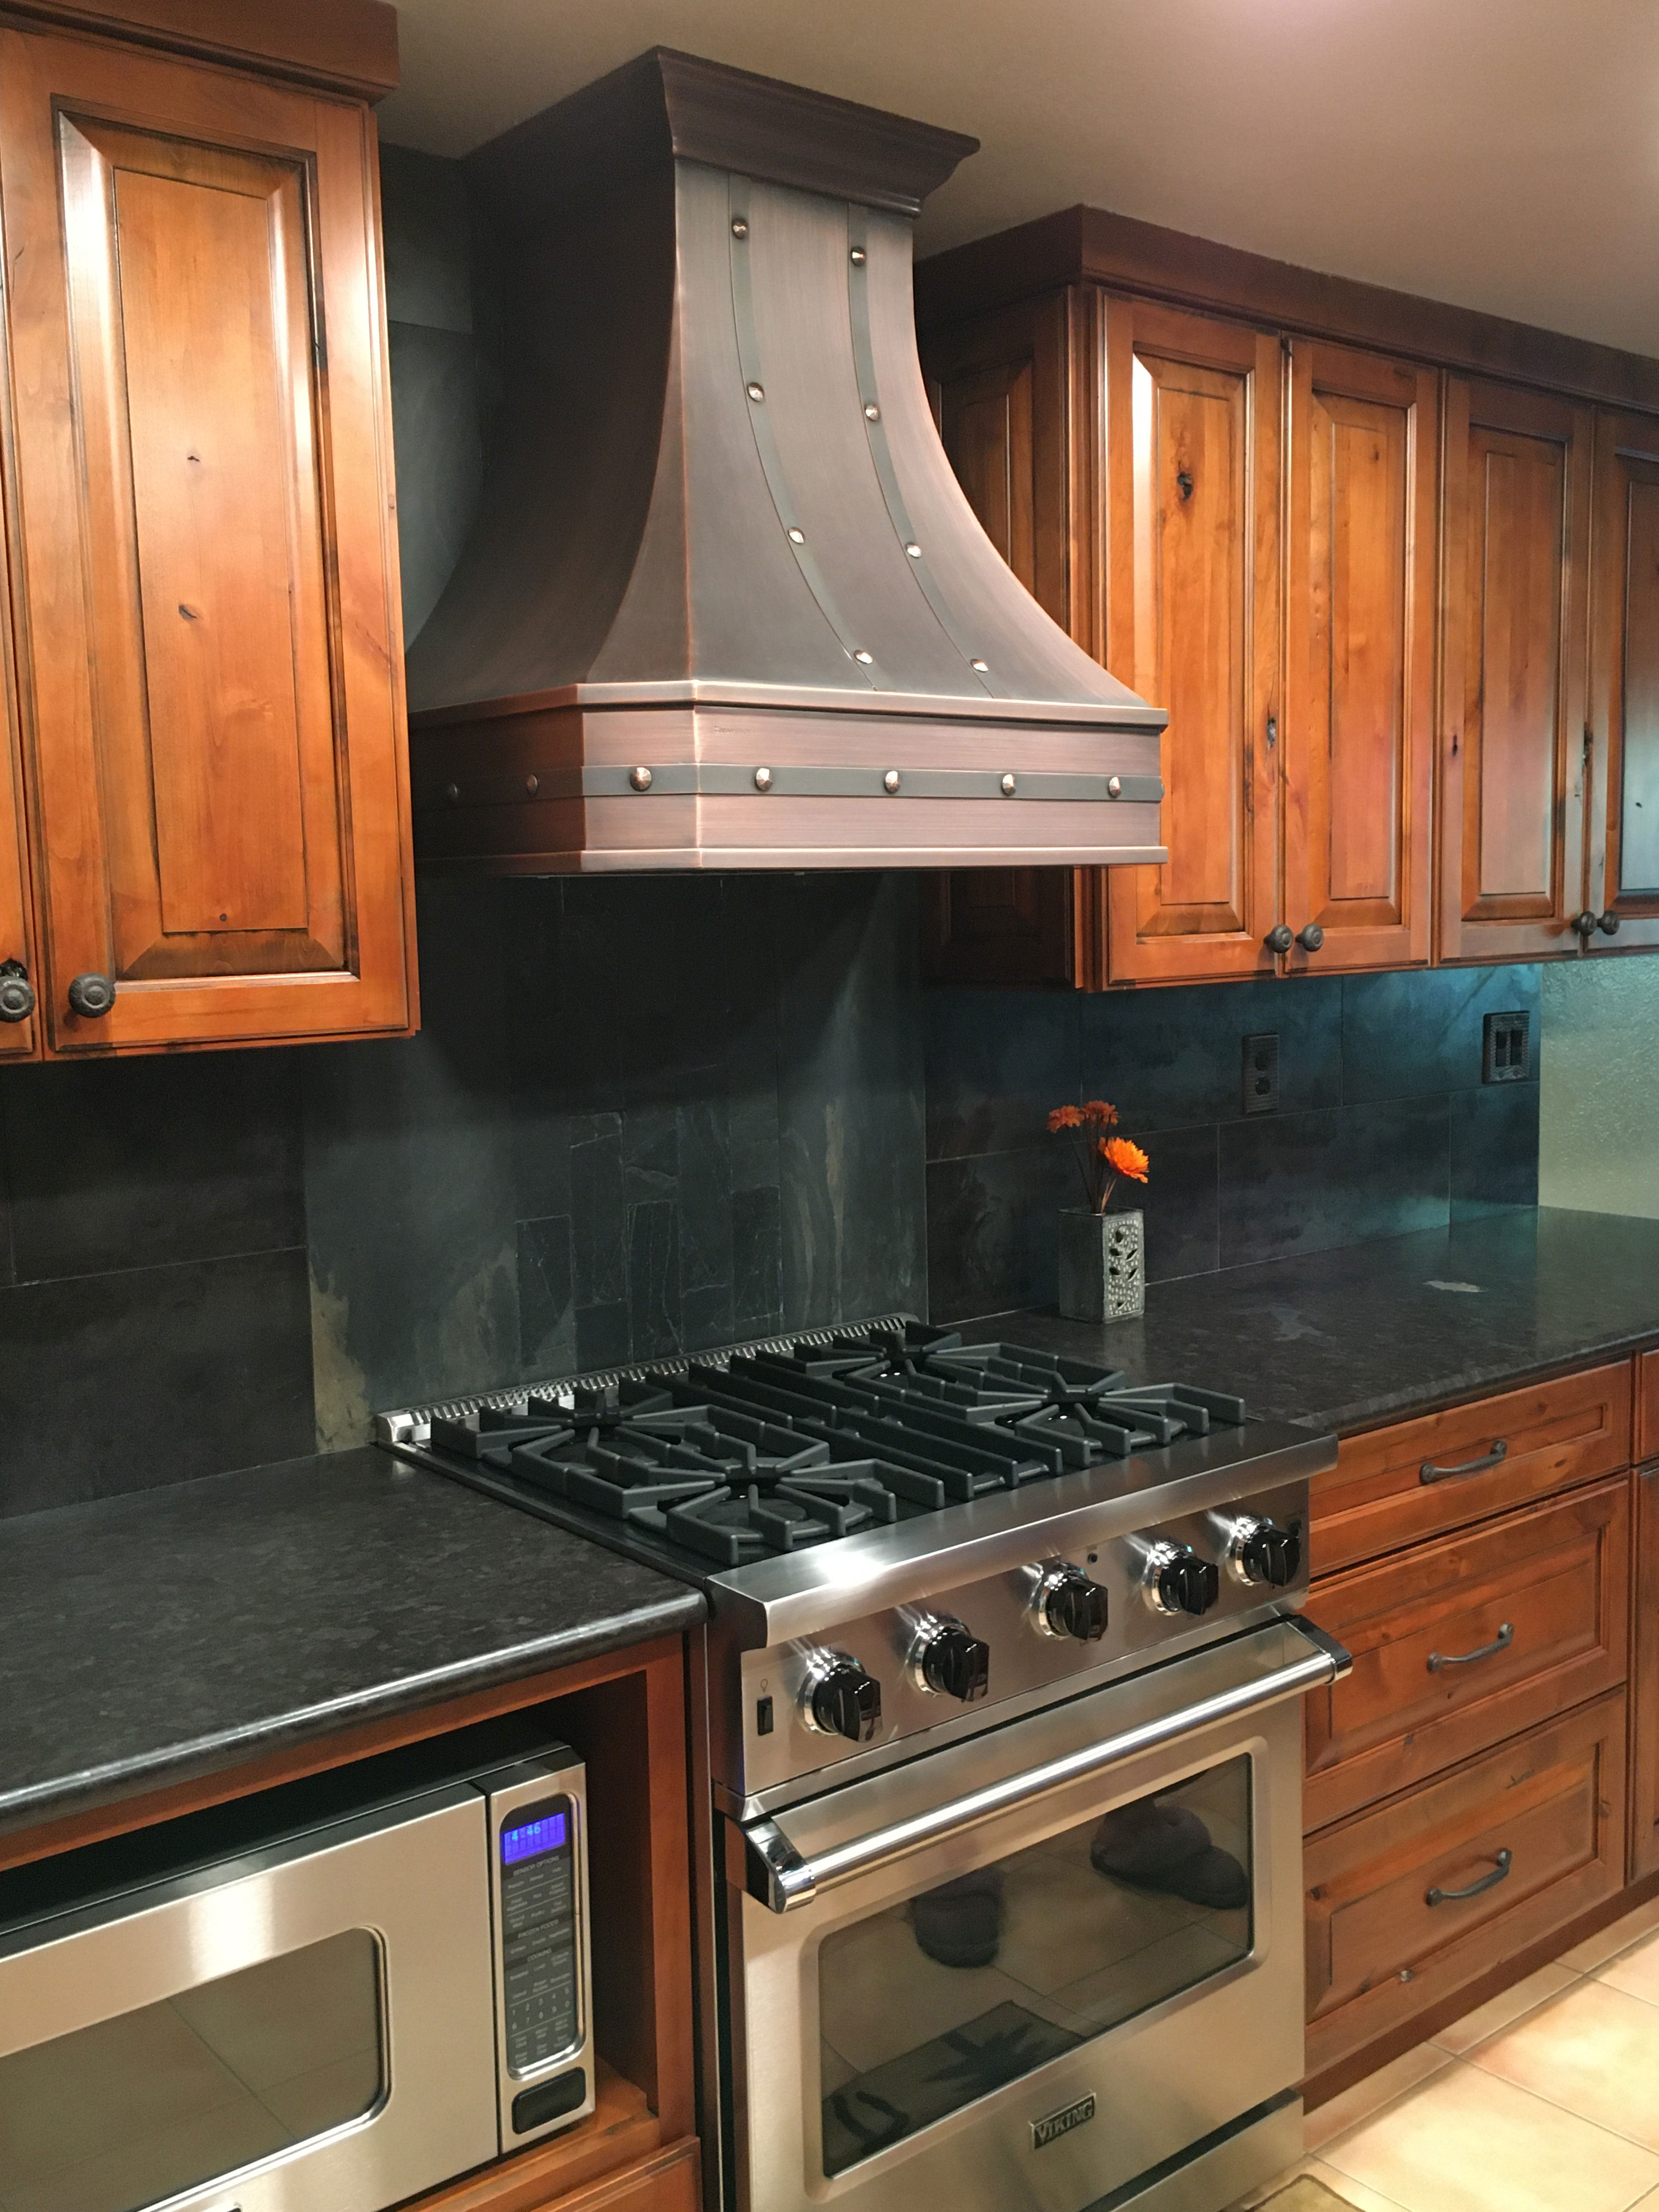 Kitchen design idea incorporating,copper range hood, brown cabinets,sleek black kitchen countertops striking marble backsplash with